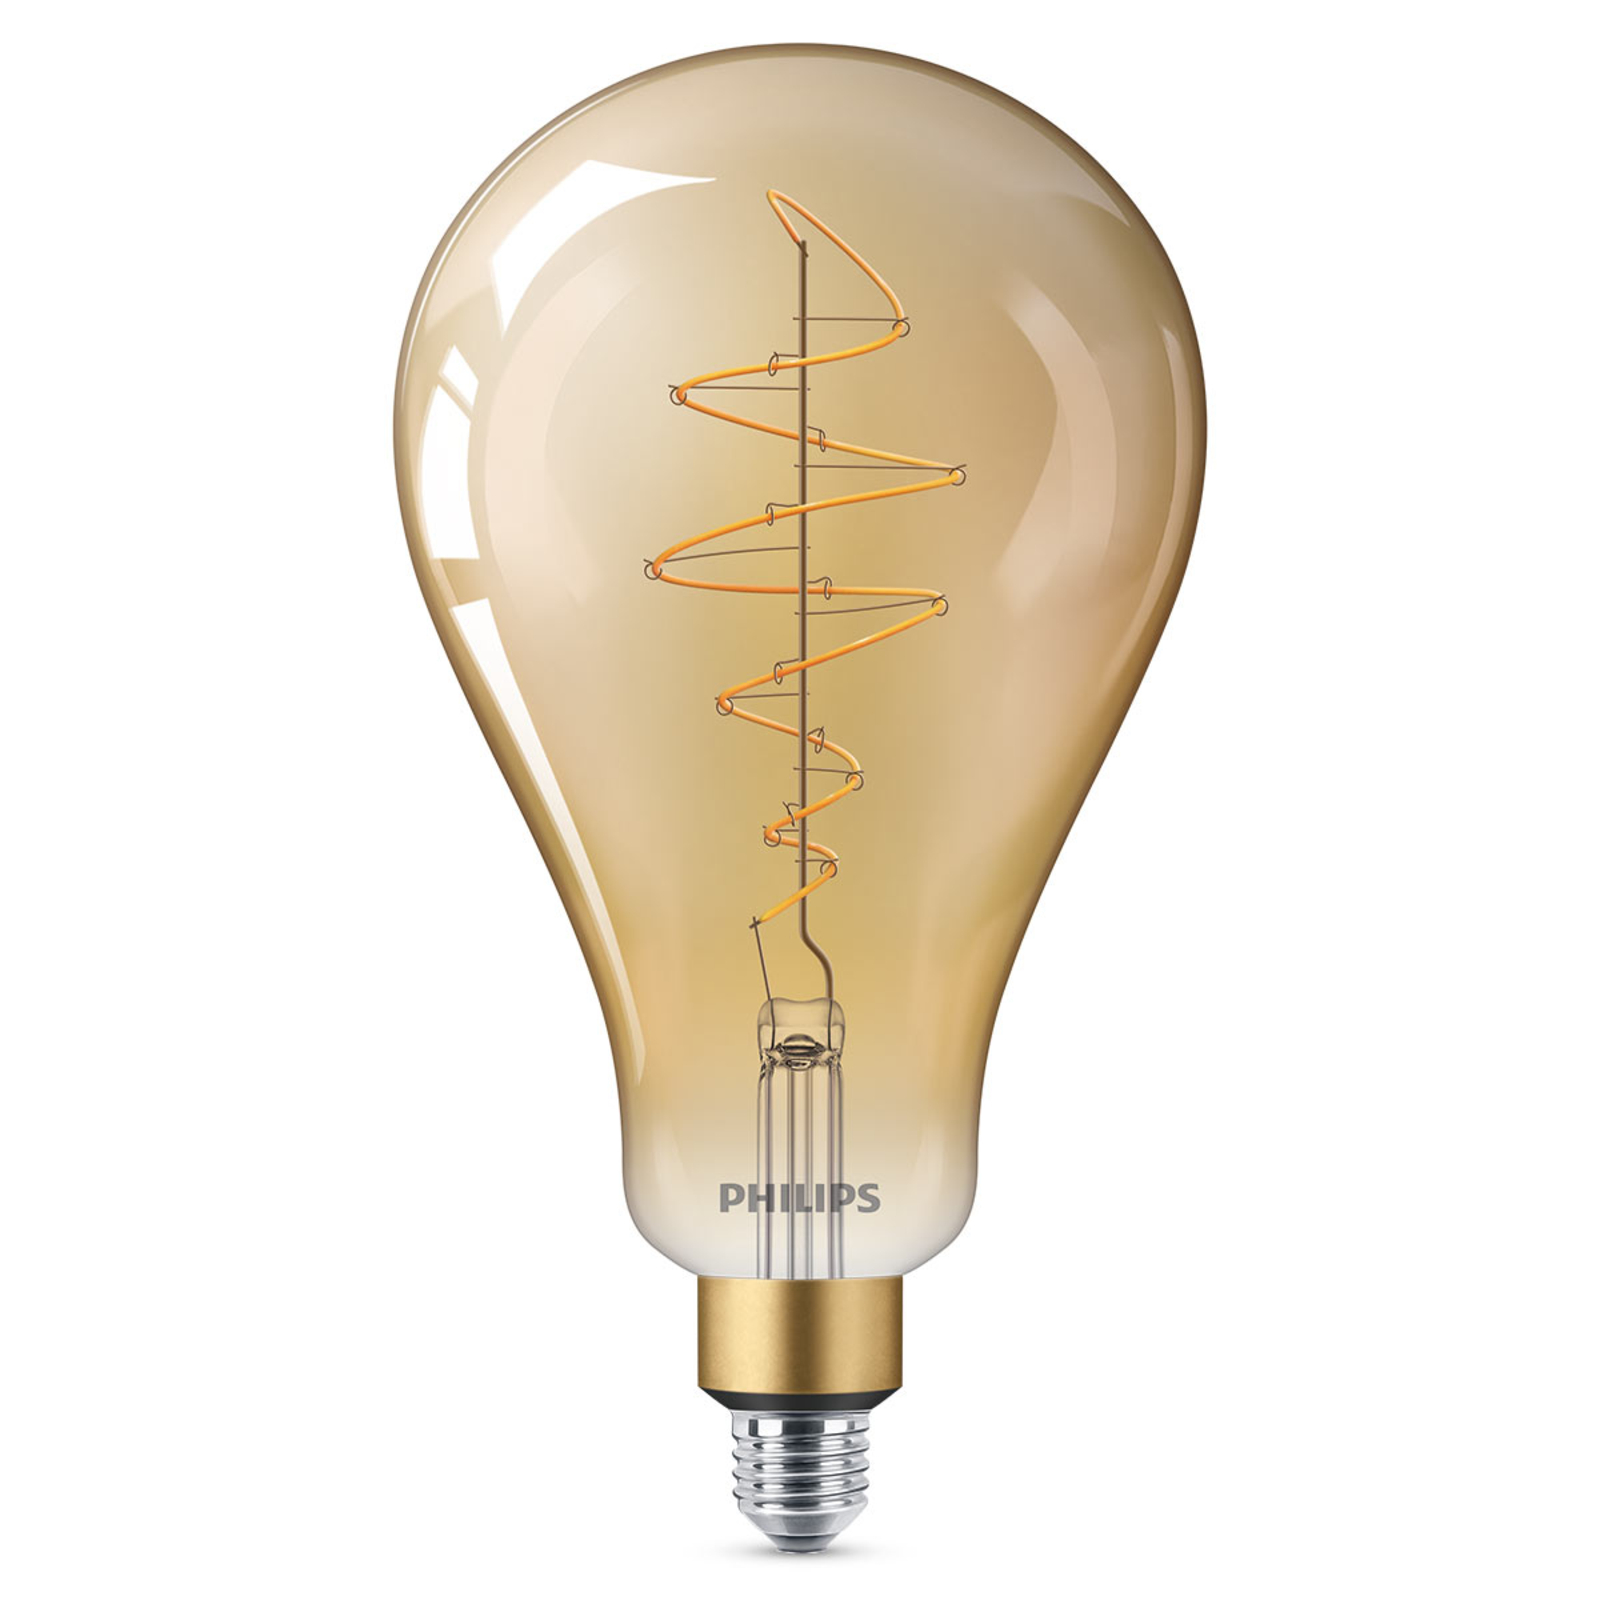 Ambacht tarief room Philips E27 Giant LED lamp 7W goud dimbaar | Lampen24.be